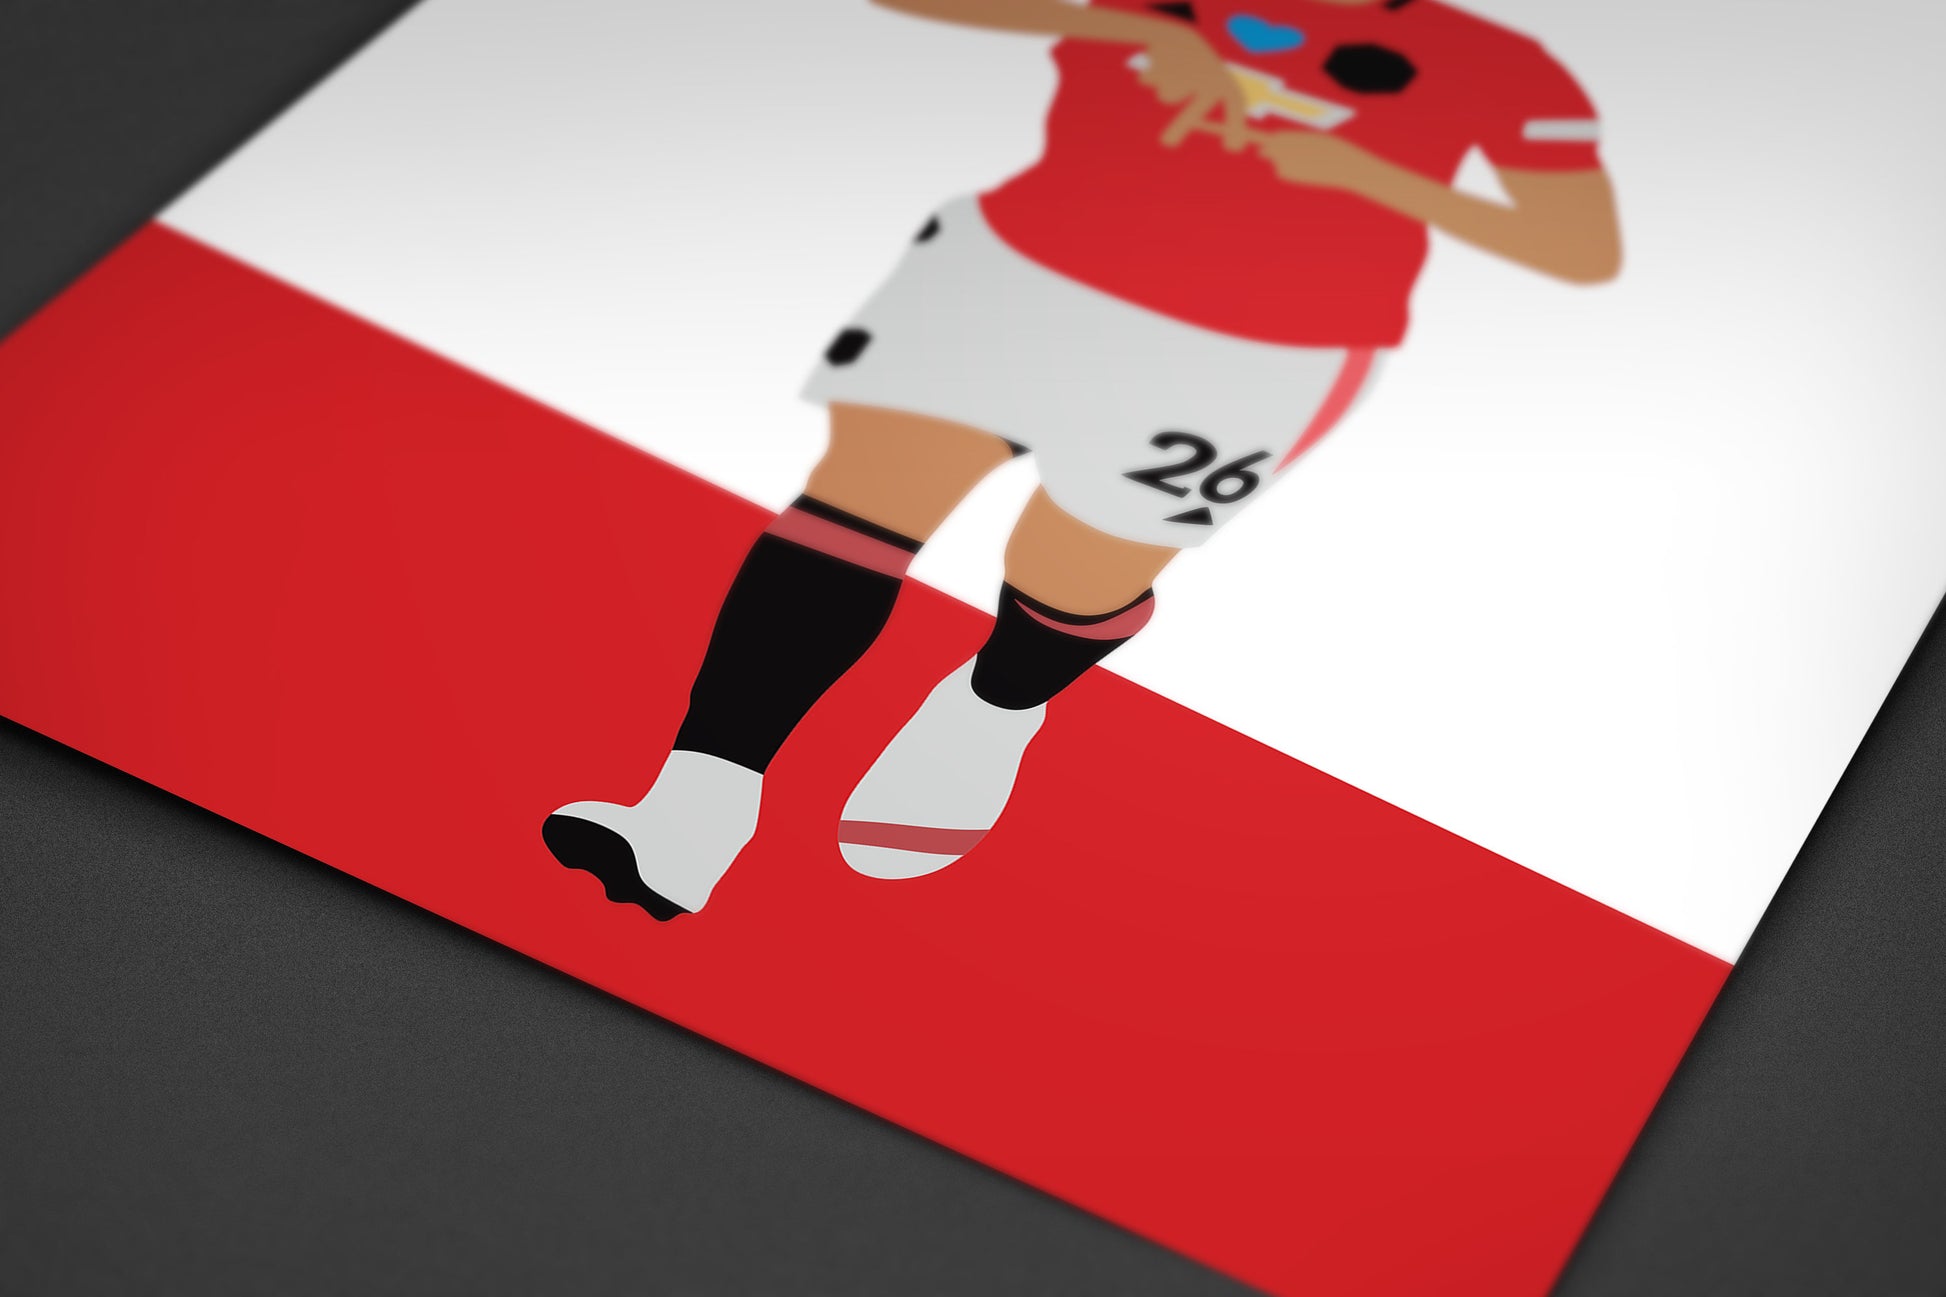 Mason 26 Artwork | Minimalist Art Print Poster Gift Idea For Him | Football Print | Soccer| Gift for Husband Boyfriend